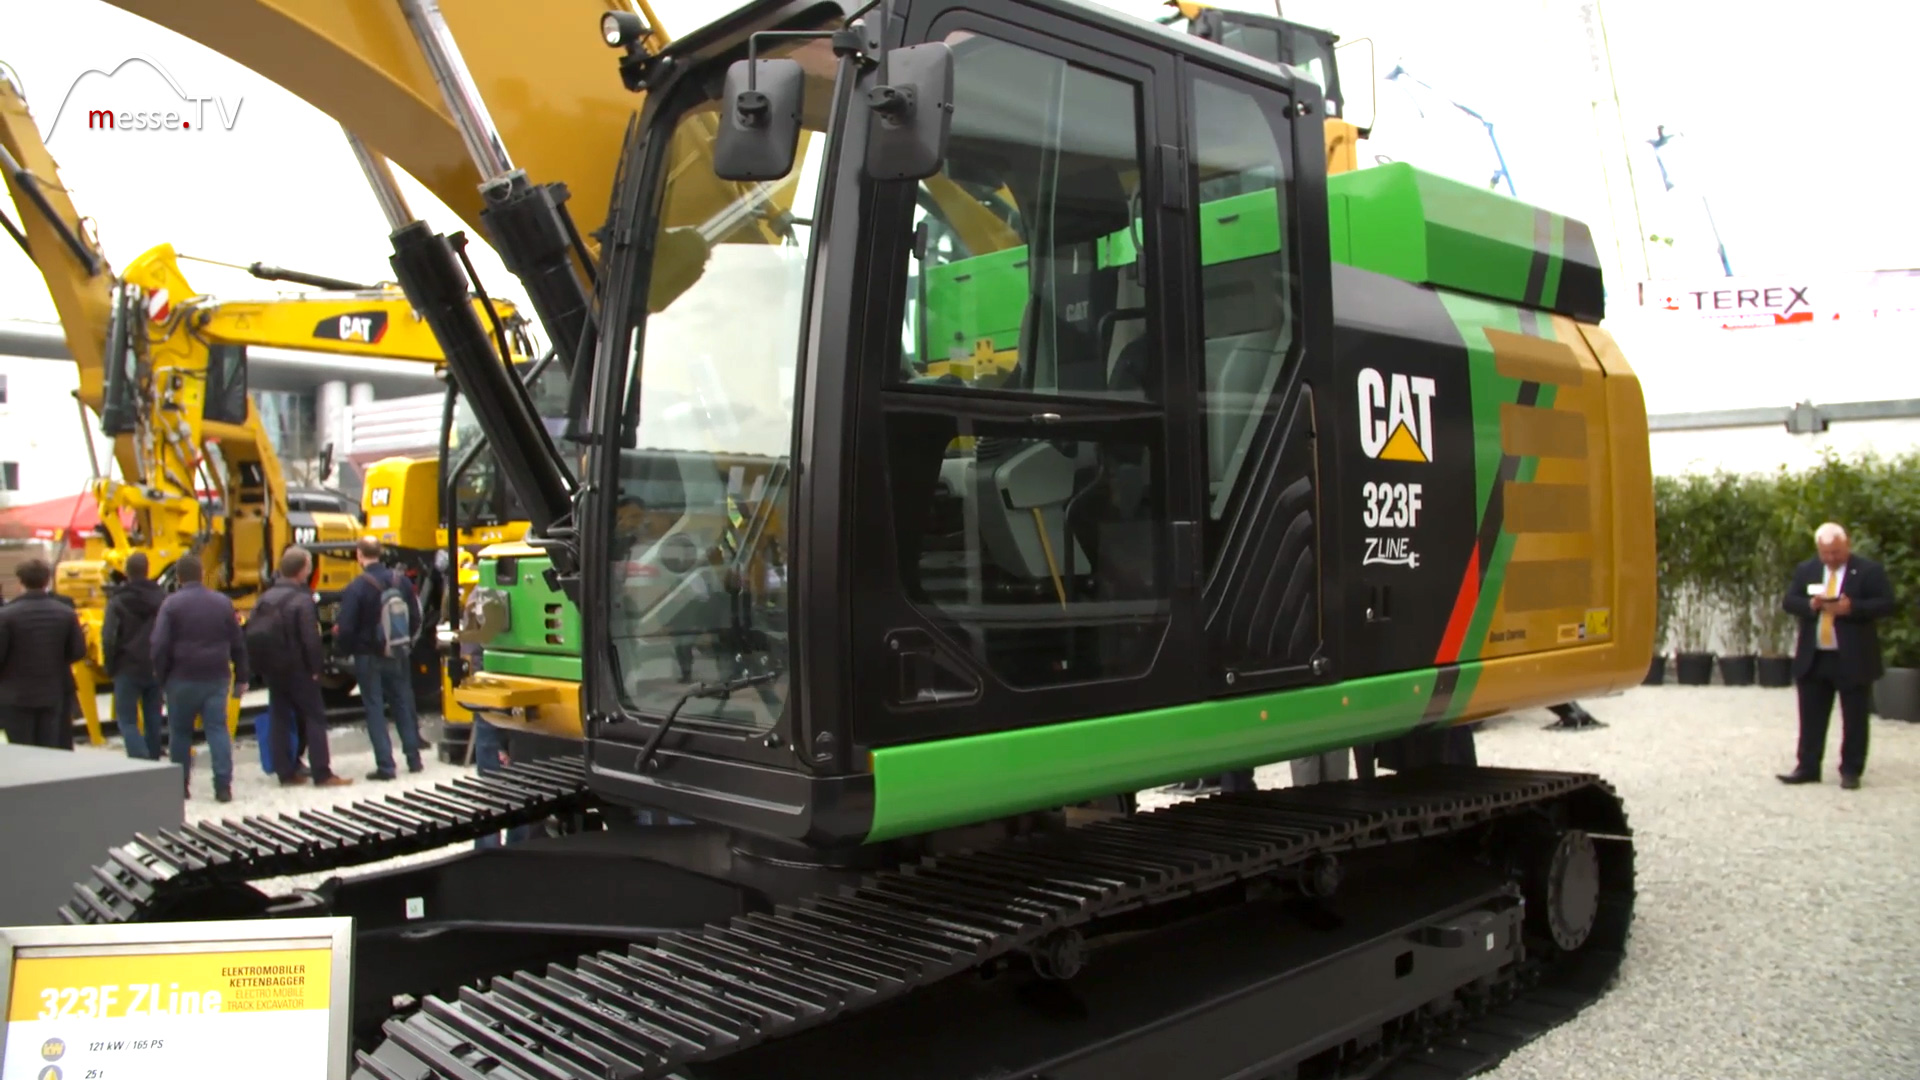 Caterpillar Pon fully electric excavator 323F Z Line bauma 2019 trade fair Munich